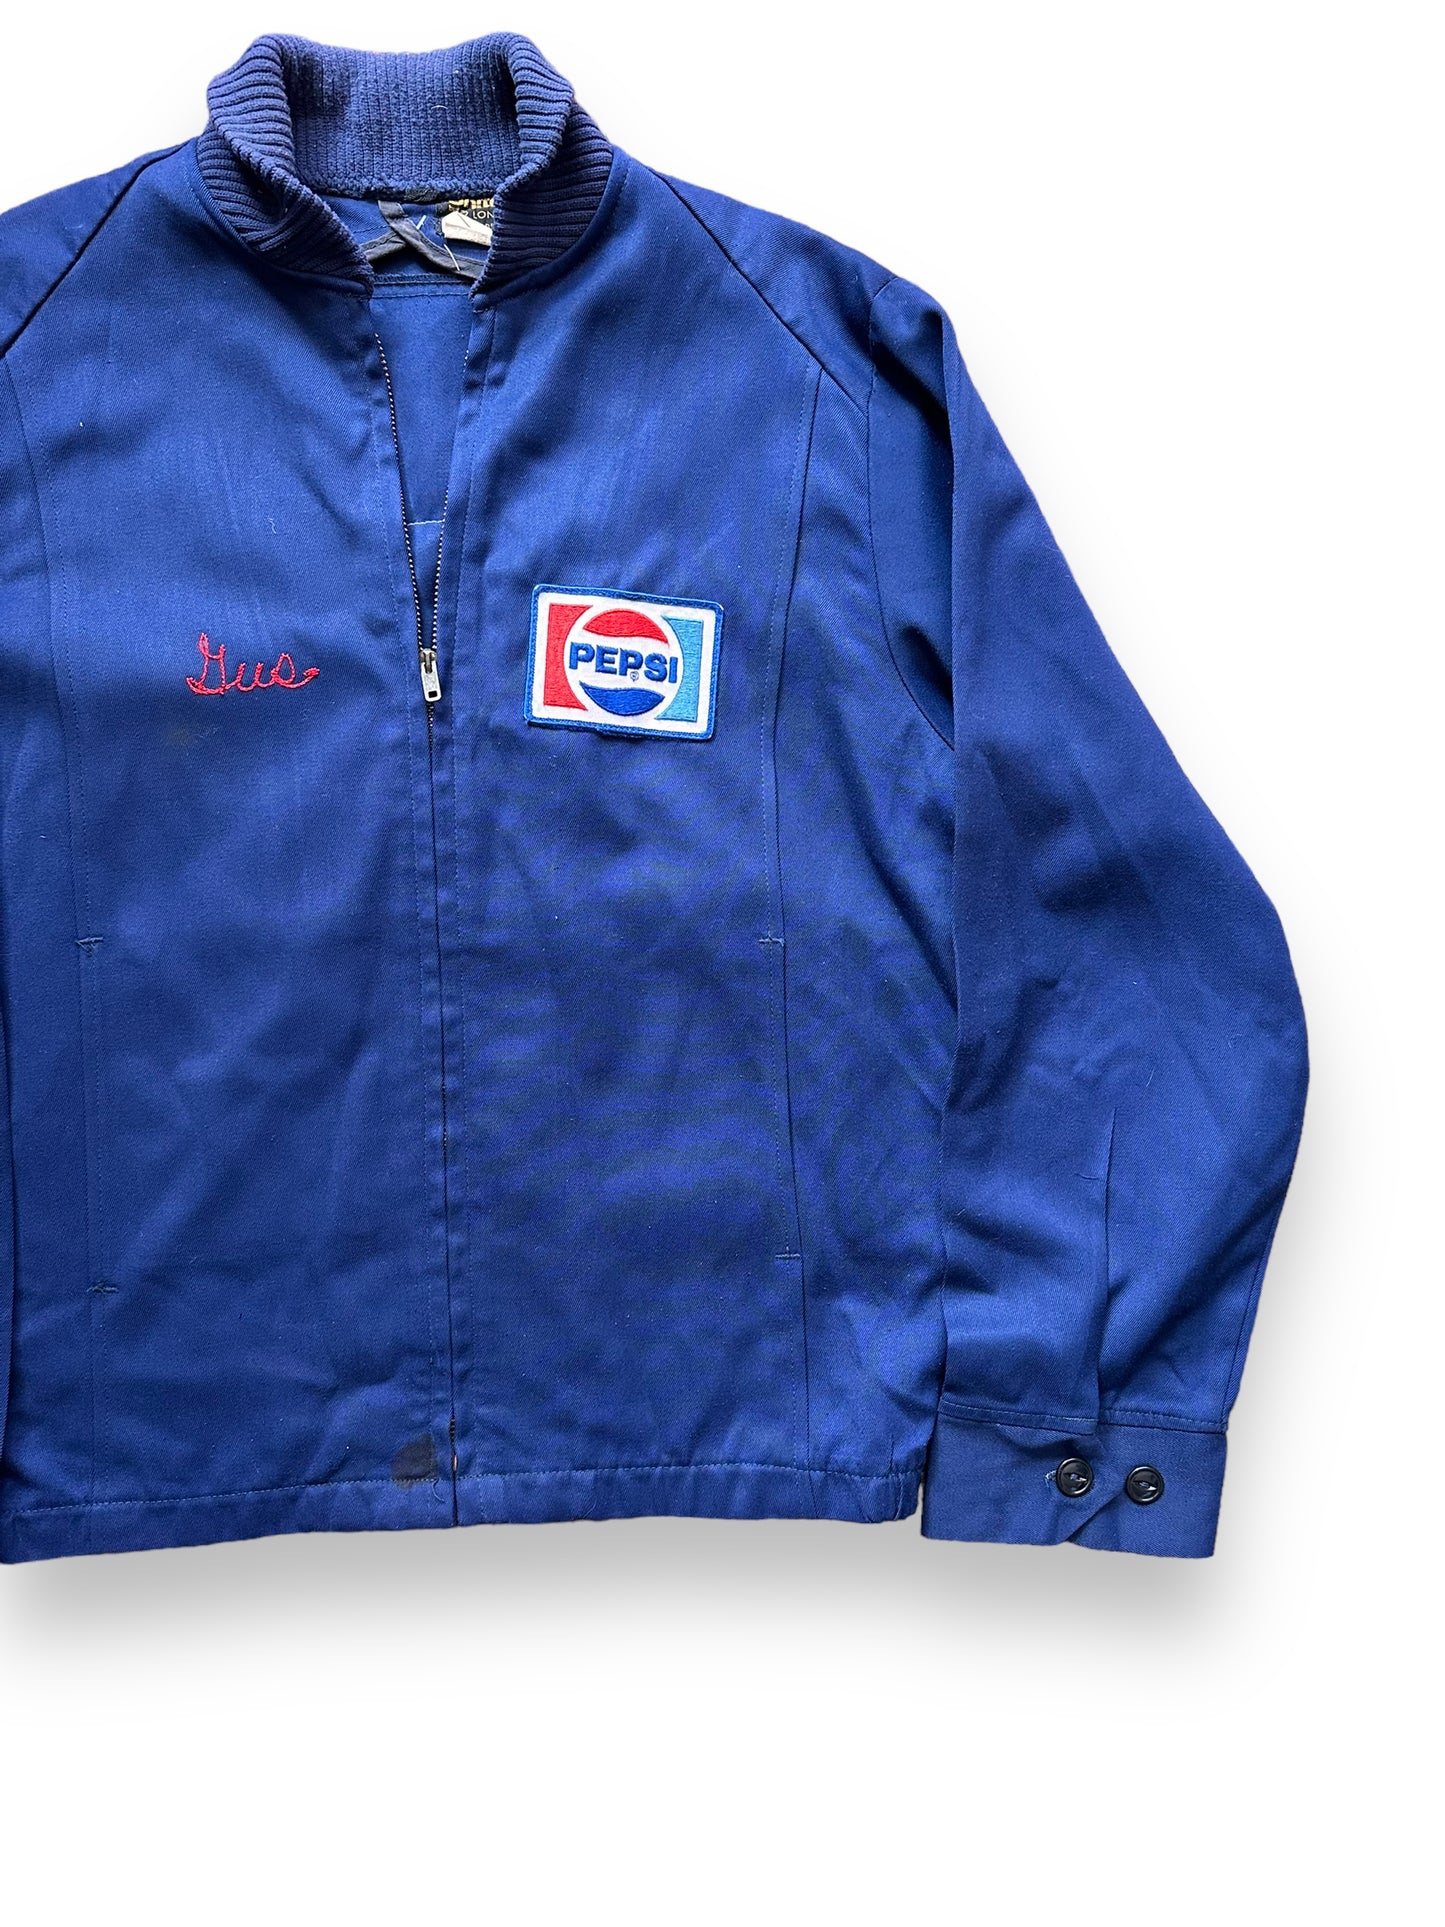 Front Left View of Vintage Unitog Pepsi Duroprest Jacket SZ 42 Long | Vintage Gabardine Workwear Seattle | Seattle Vintage Workwear